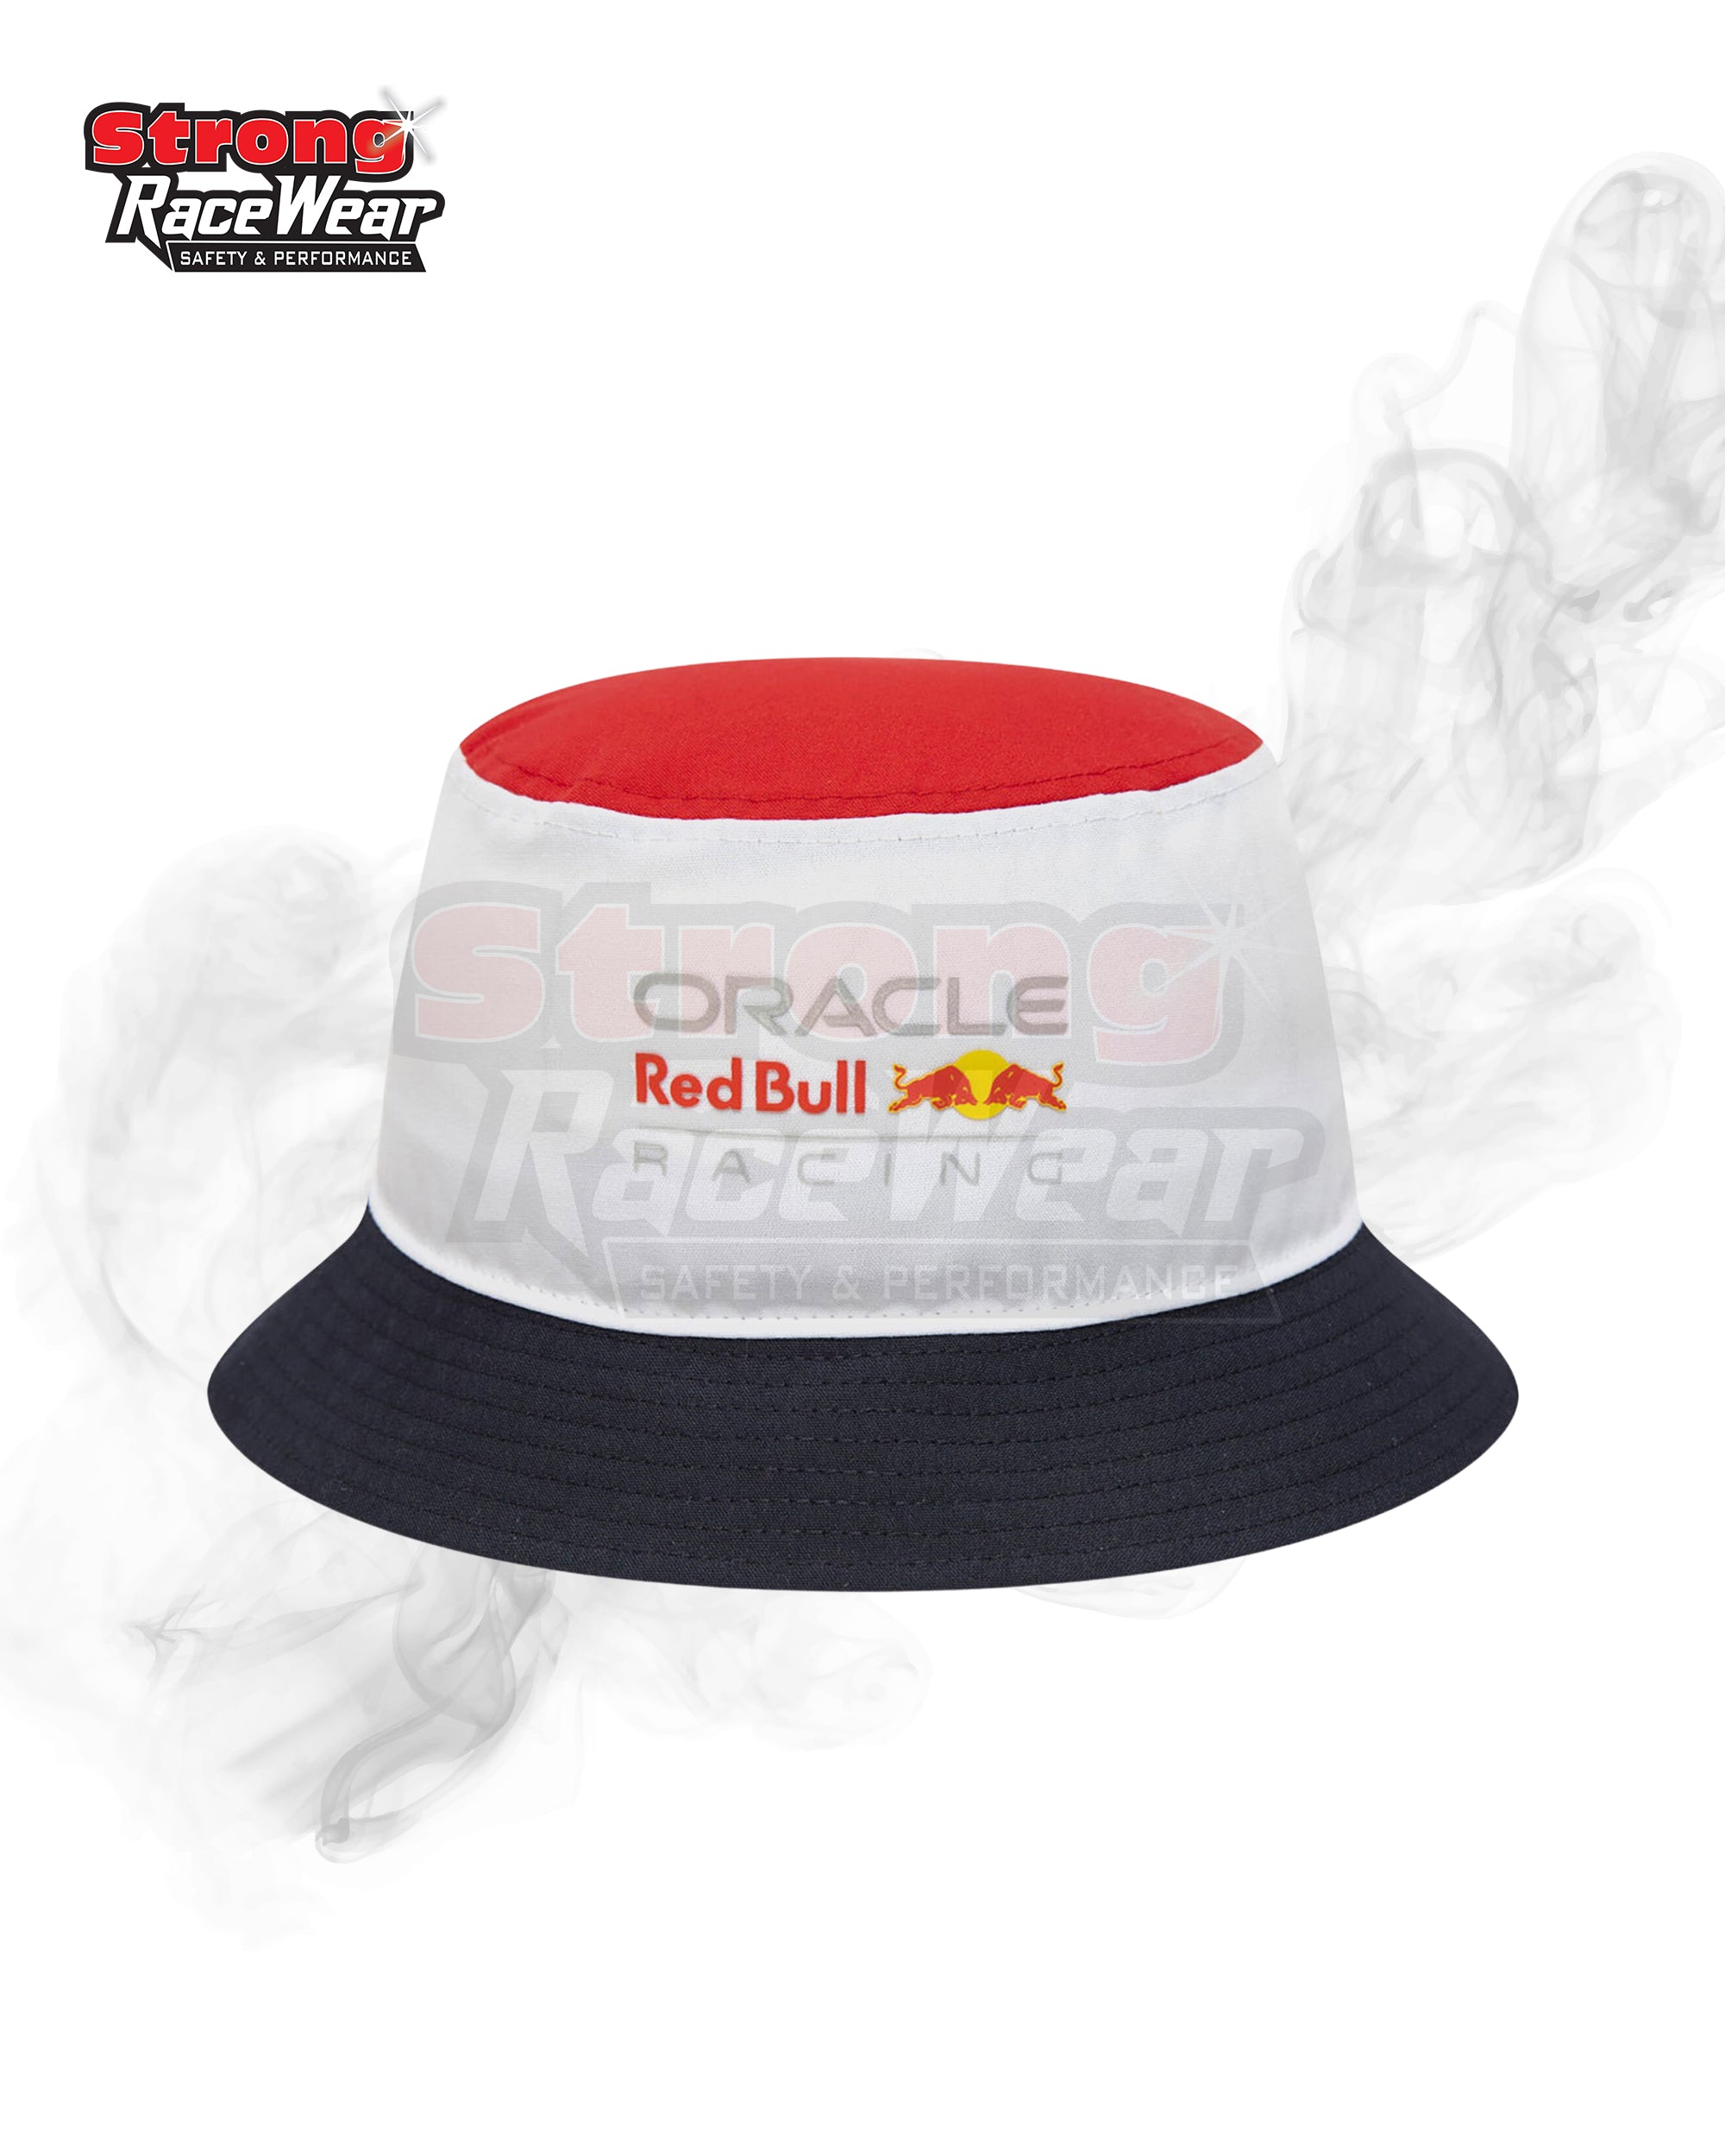 Red Bull Racing Bucket Hat